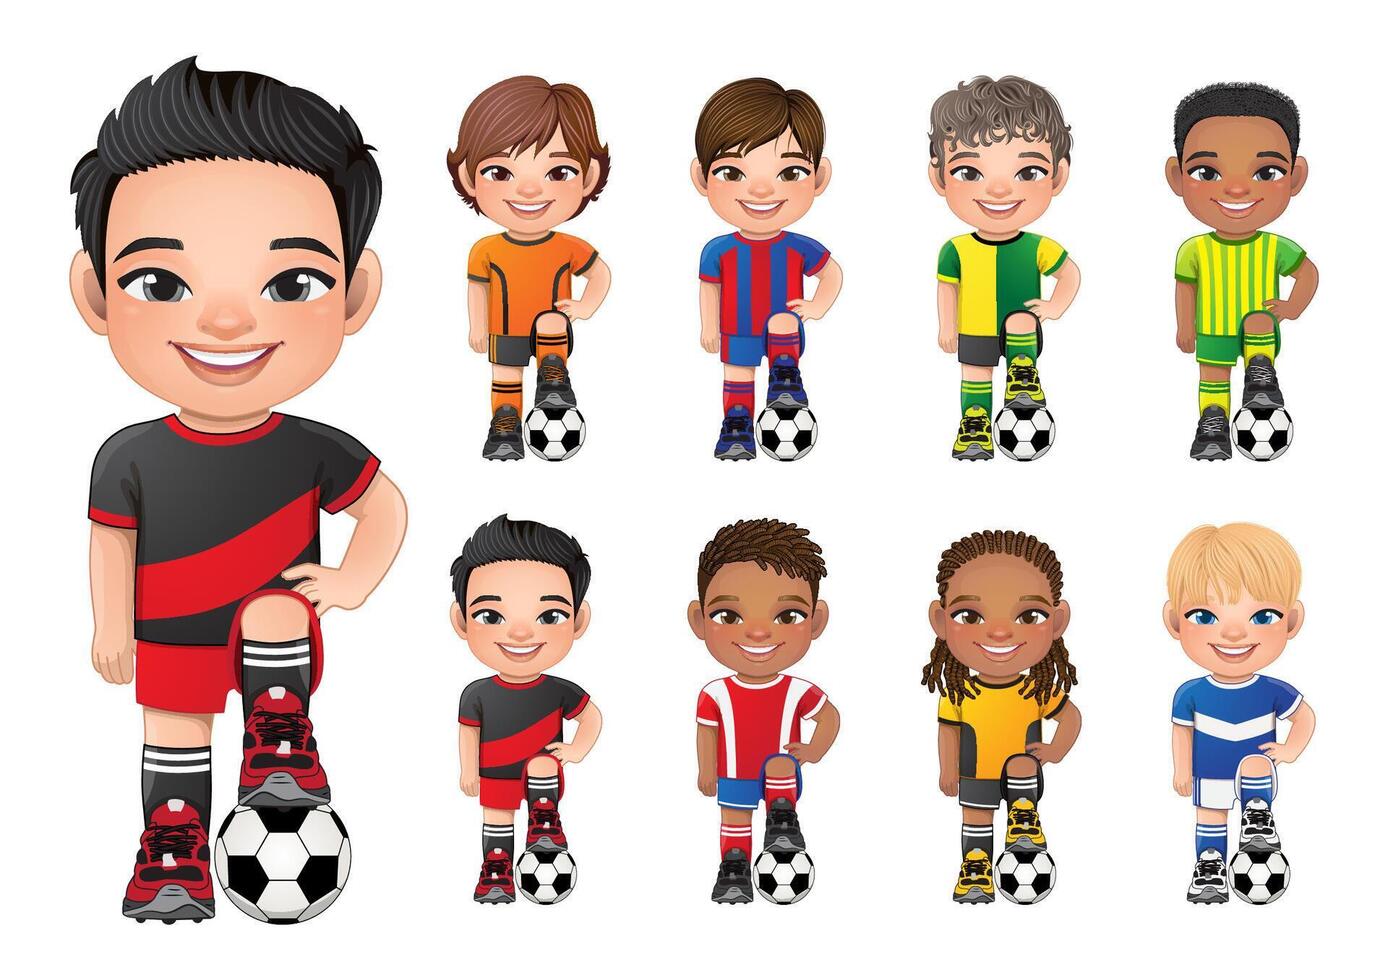 Soccer player boys international collection vector design